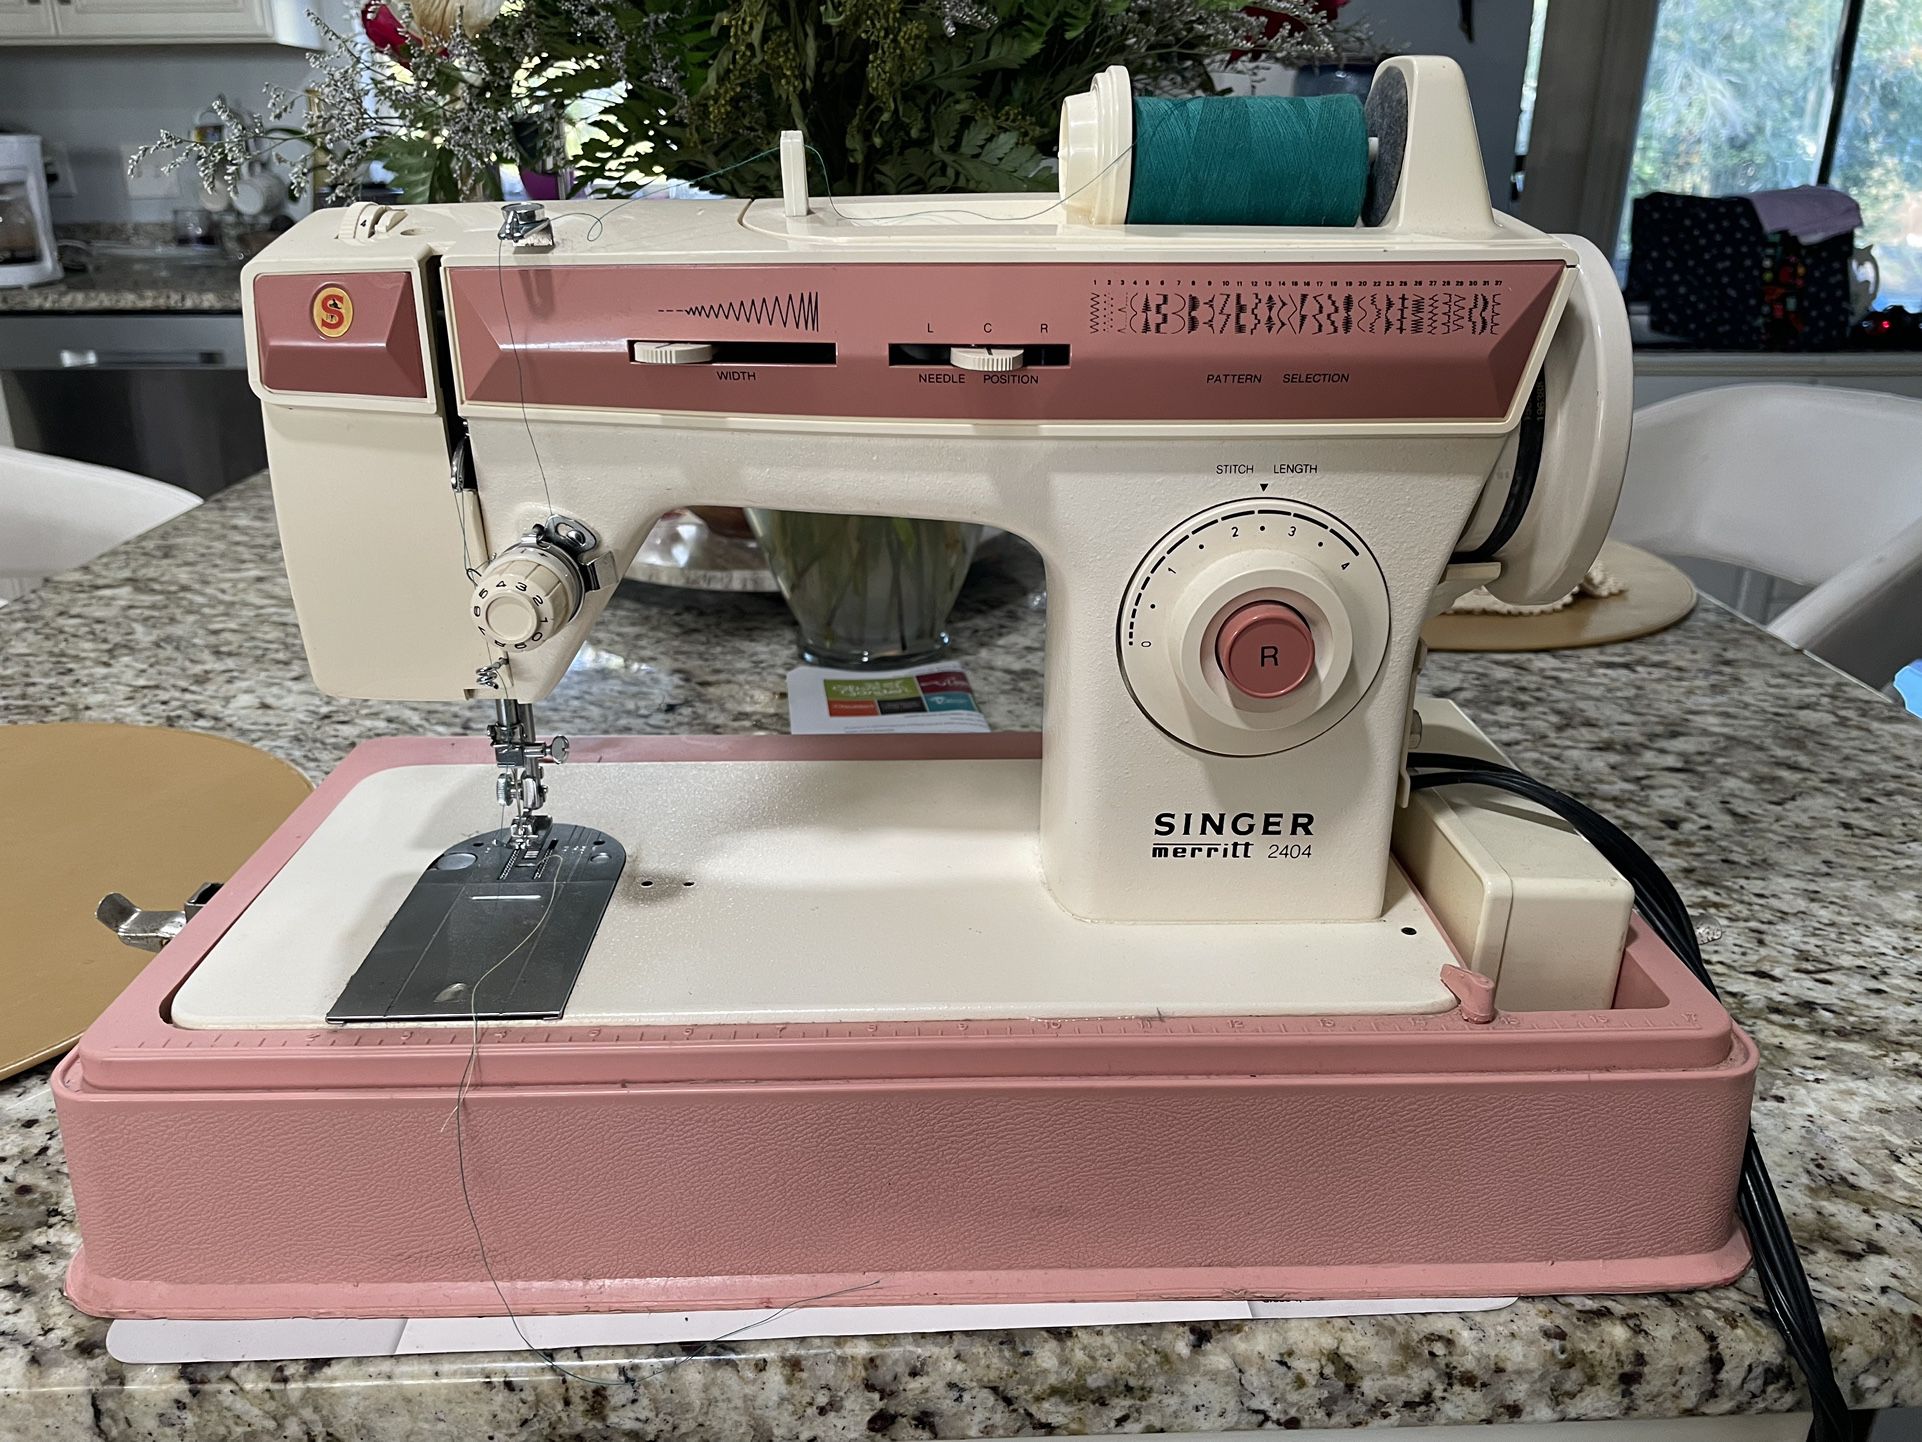 Singer Sewing Machine Merritt 2404